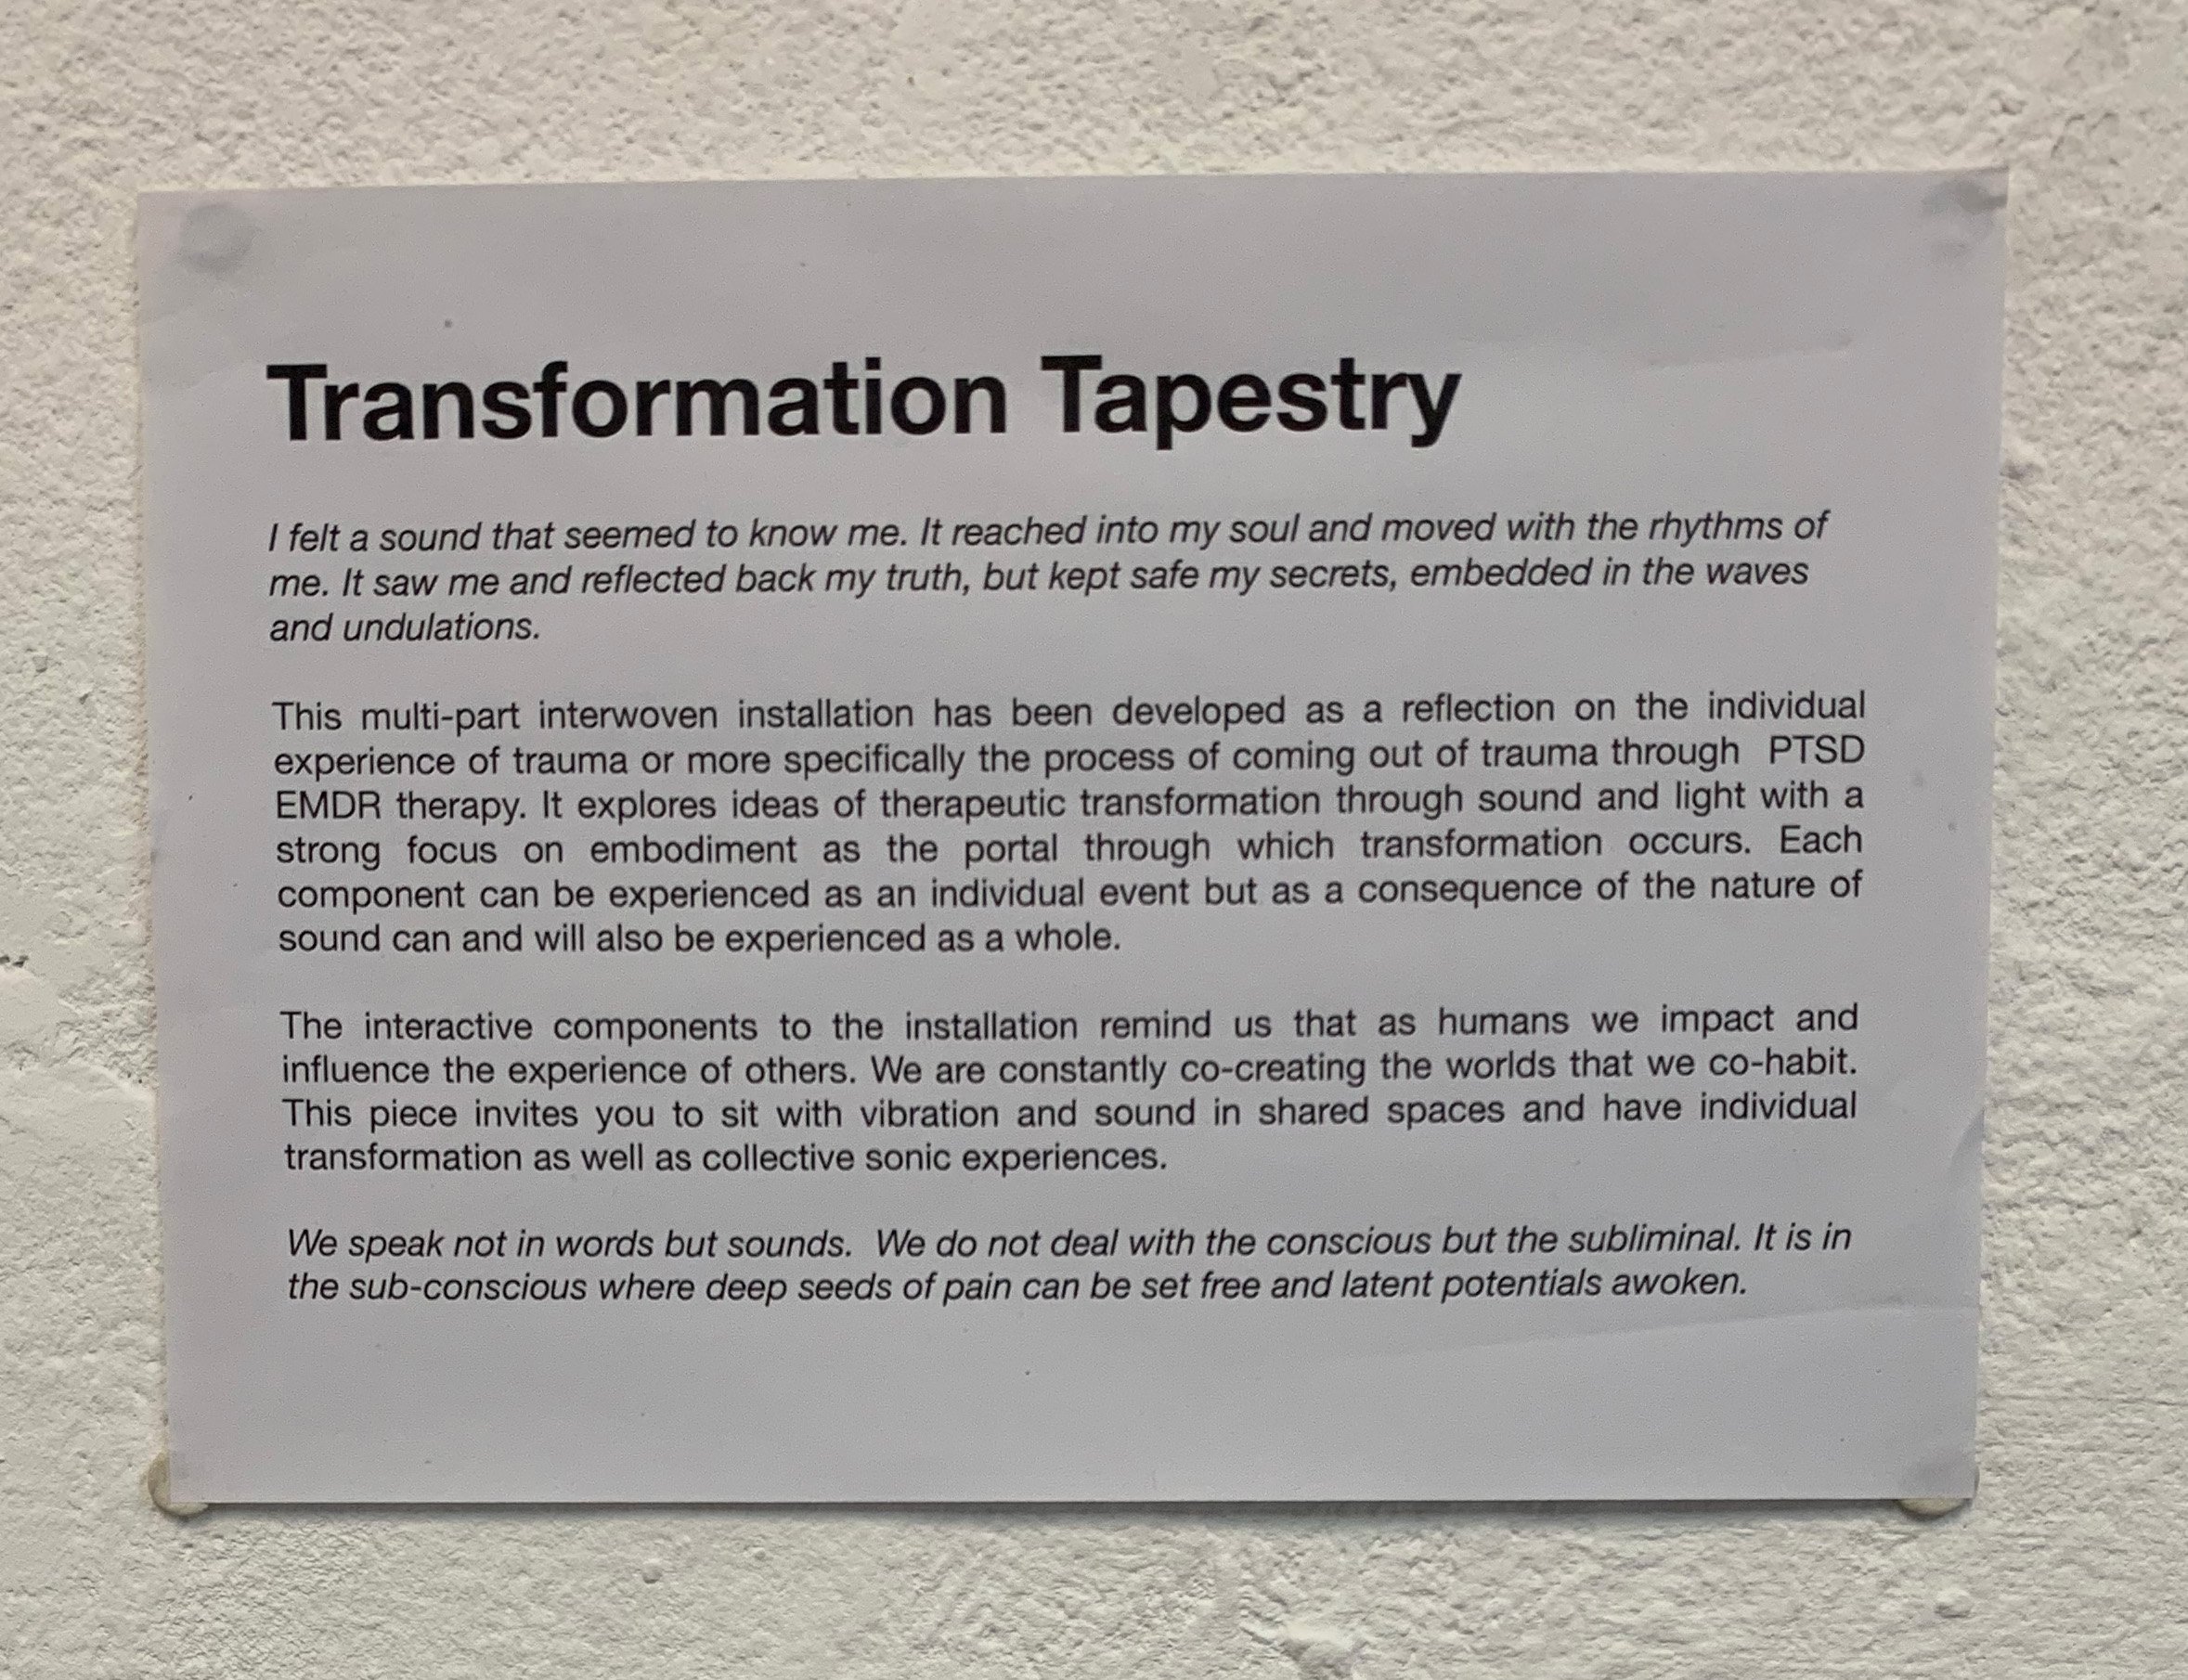 transformation tapestry info.jpg